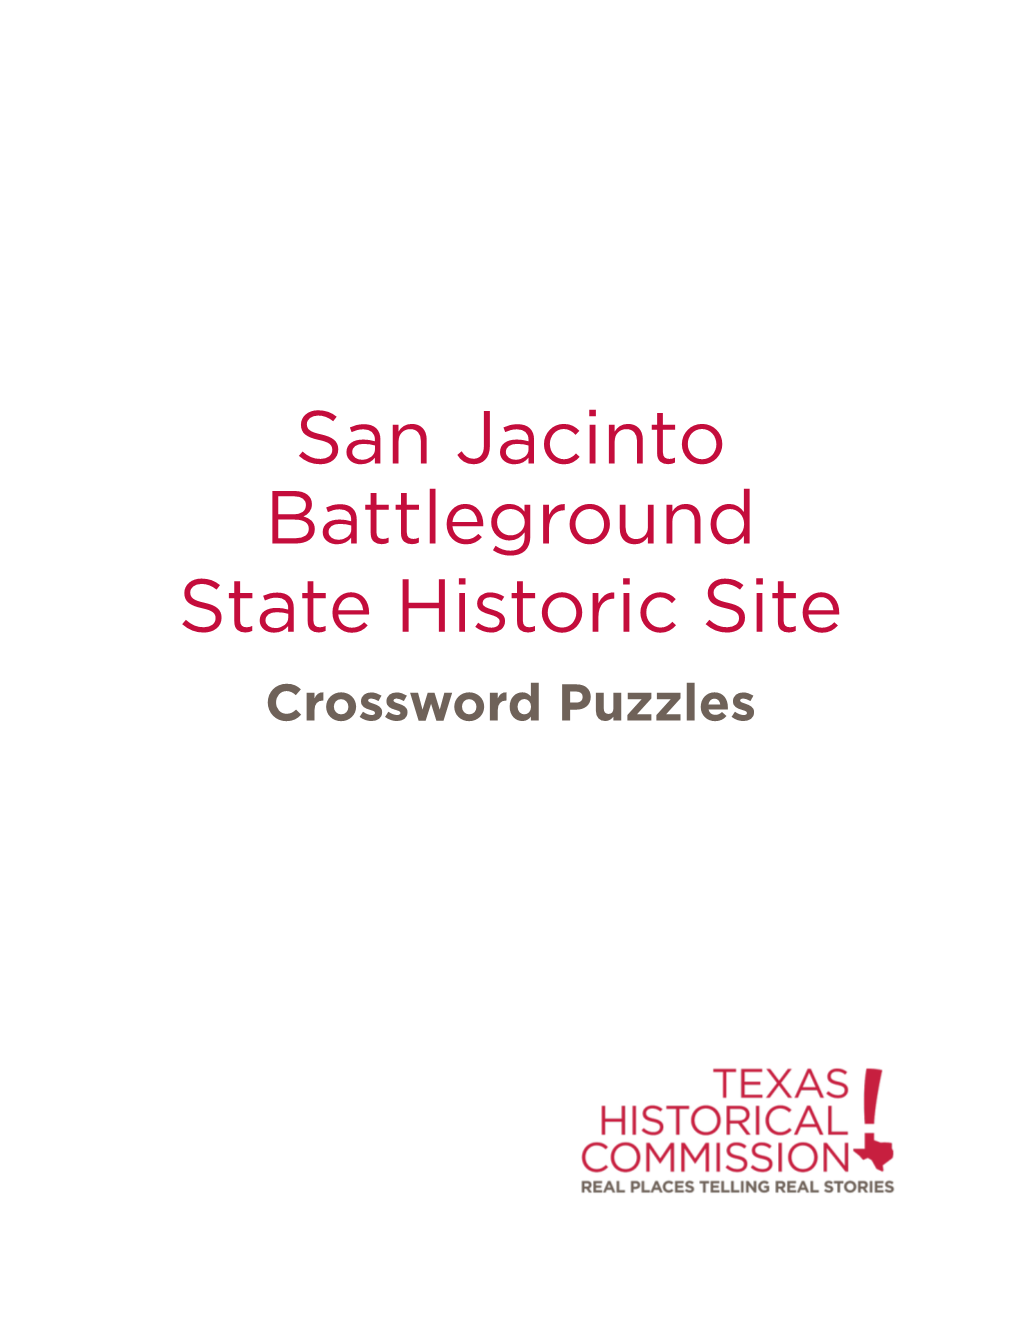 San Jacinto Battleground Crossword Puzzles